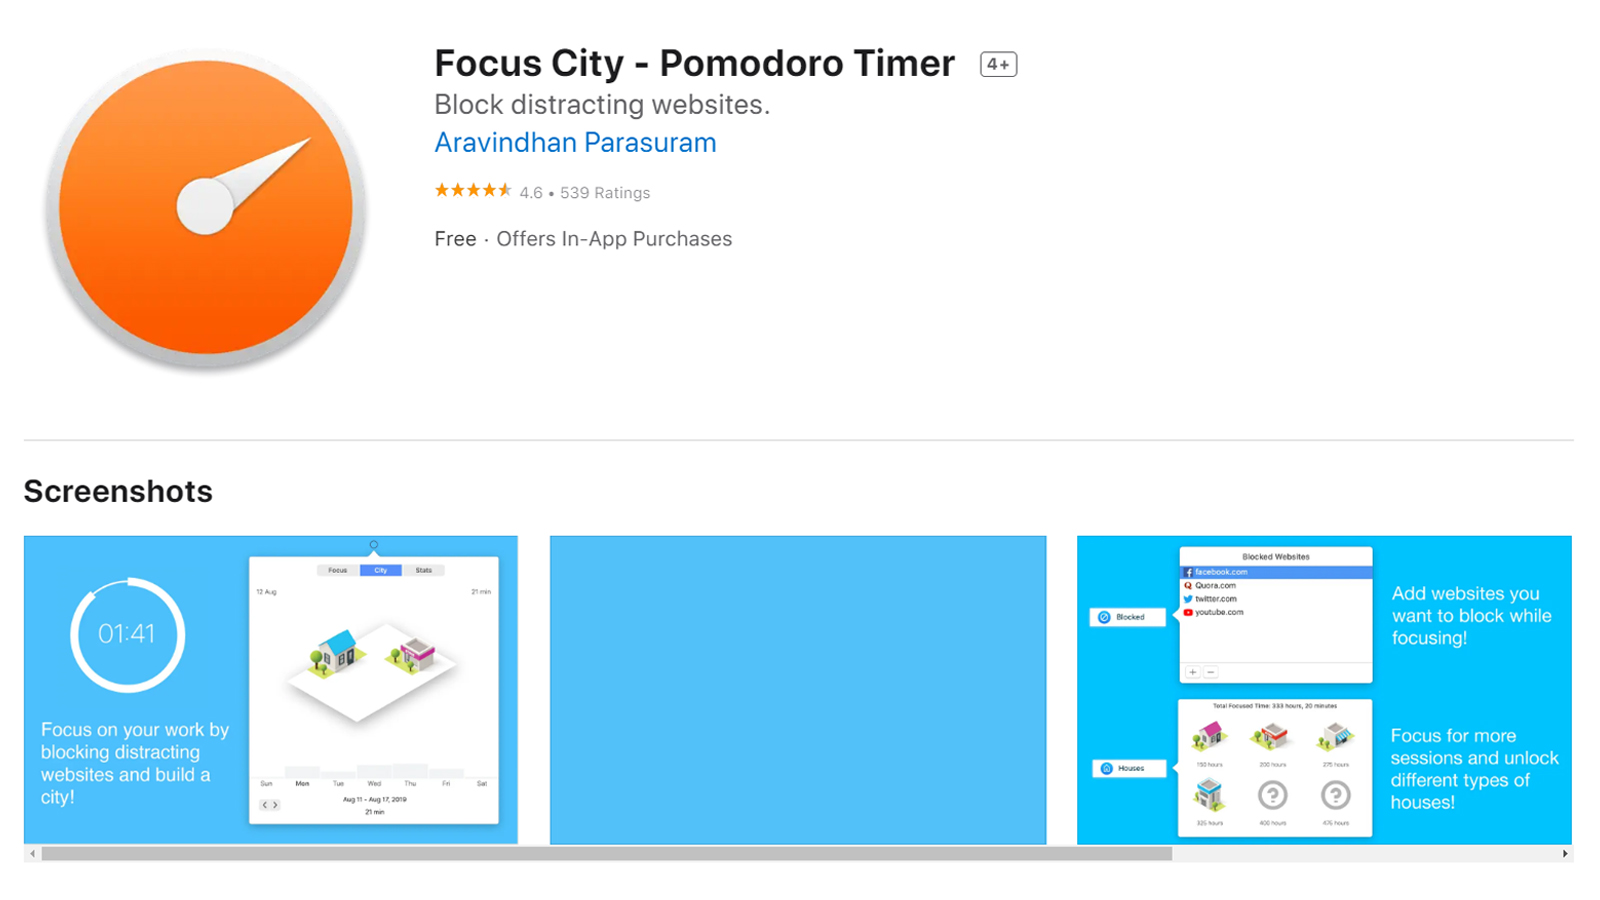 Focus City - Pomodoro Timer